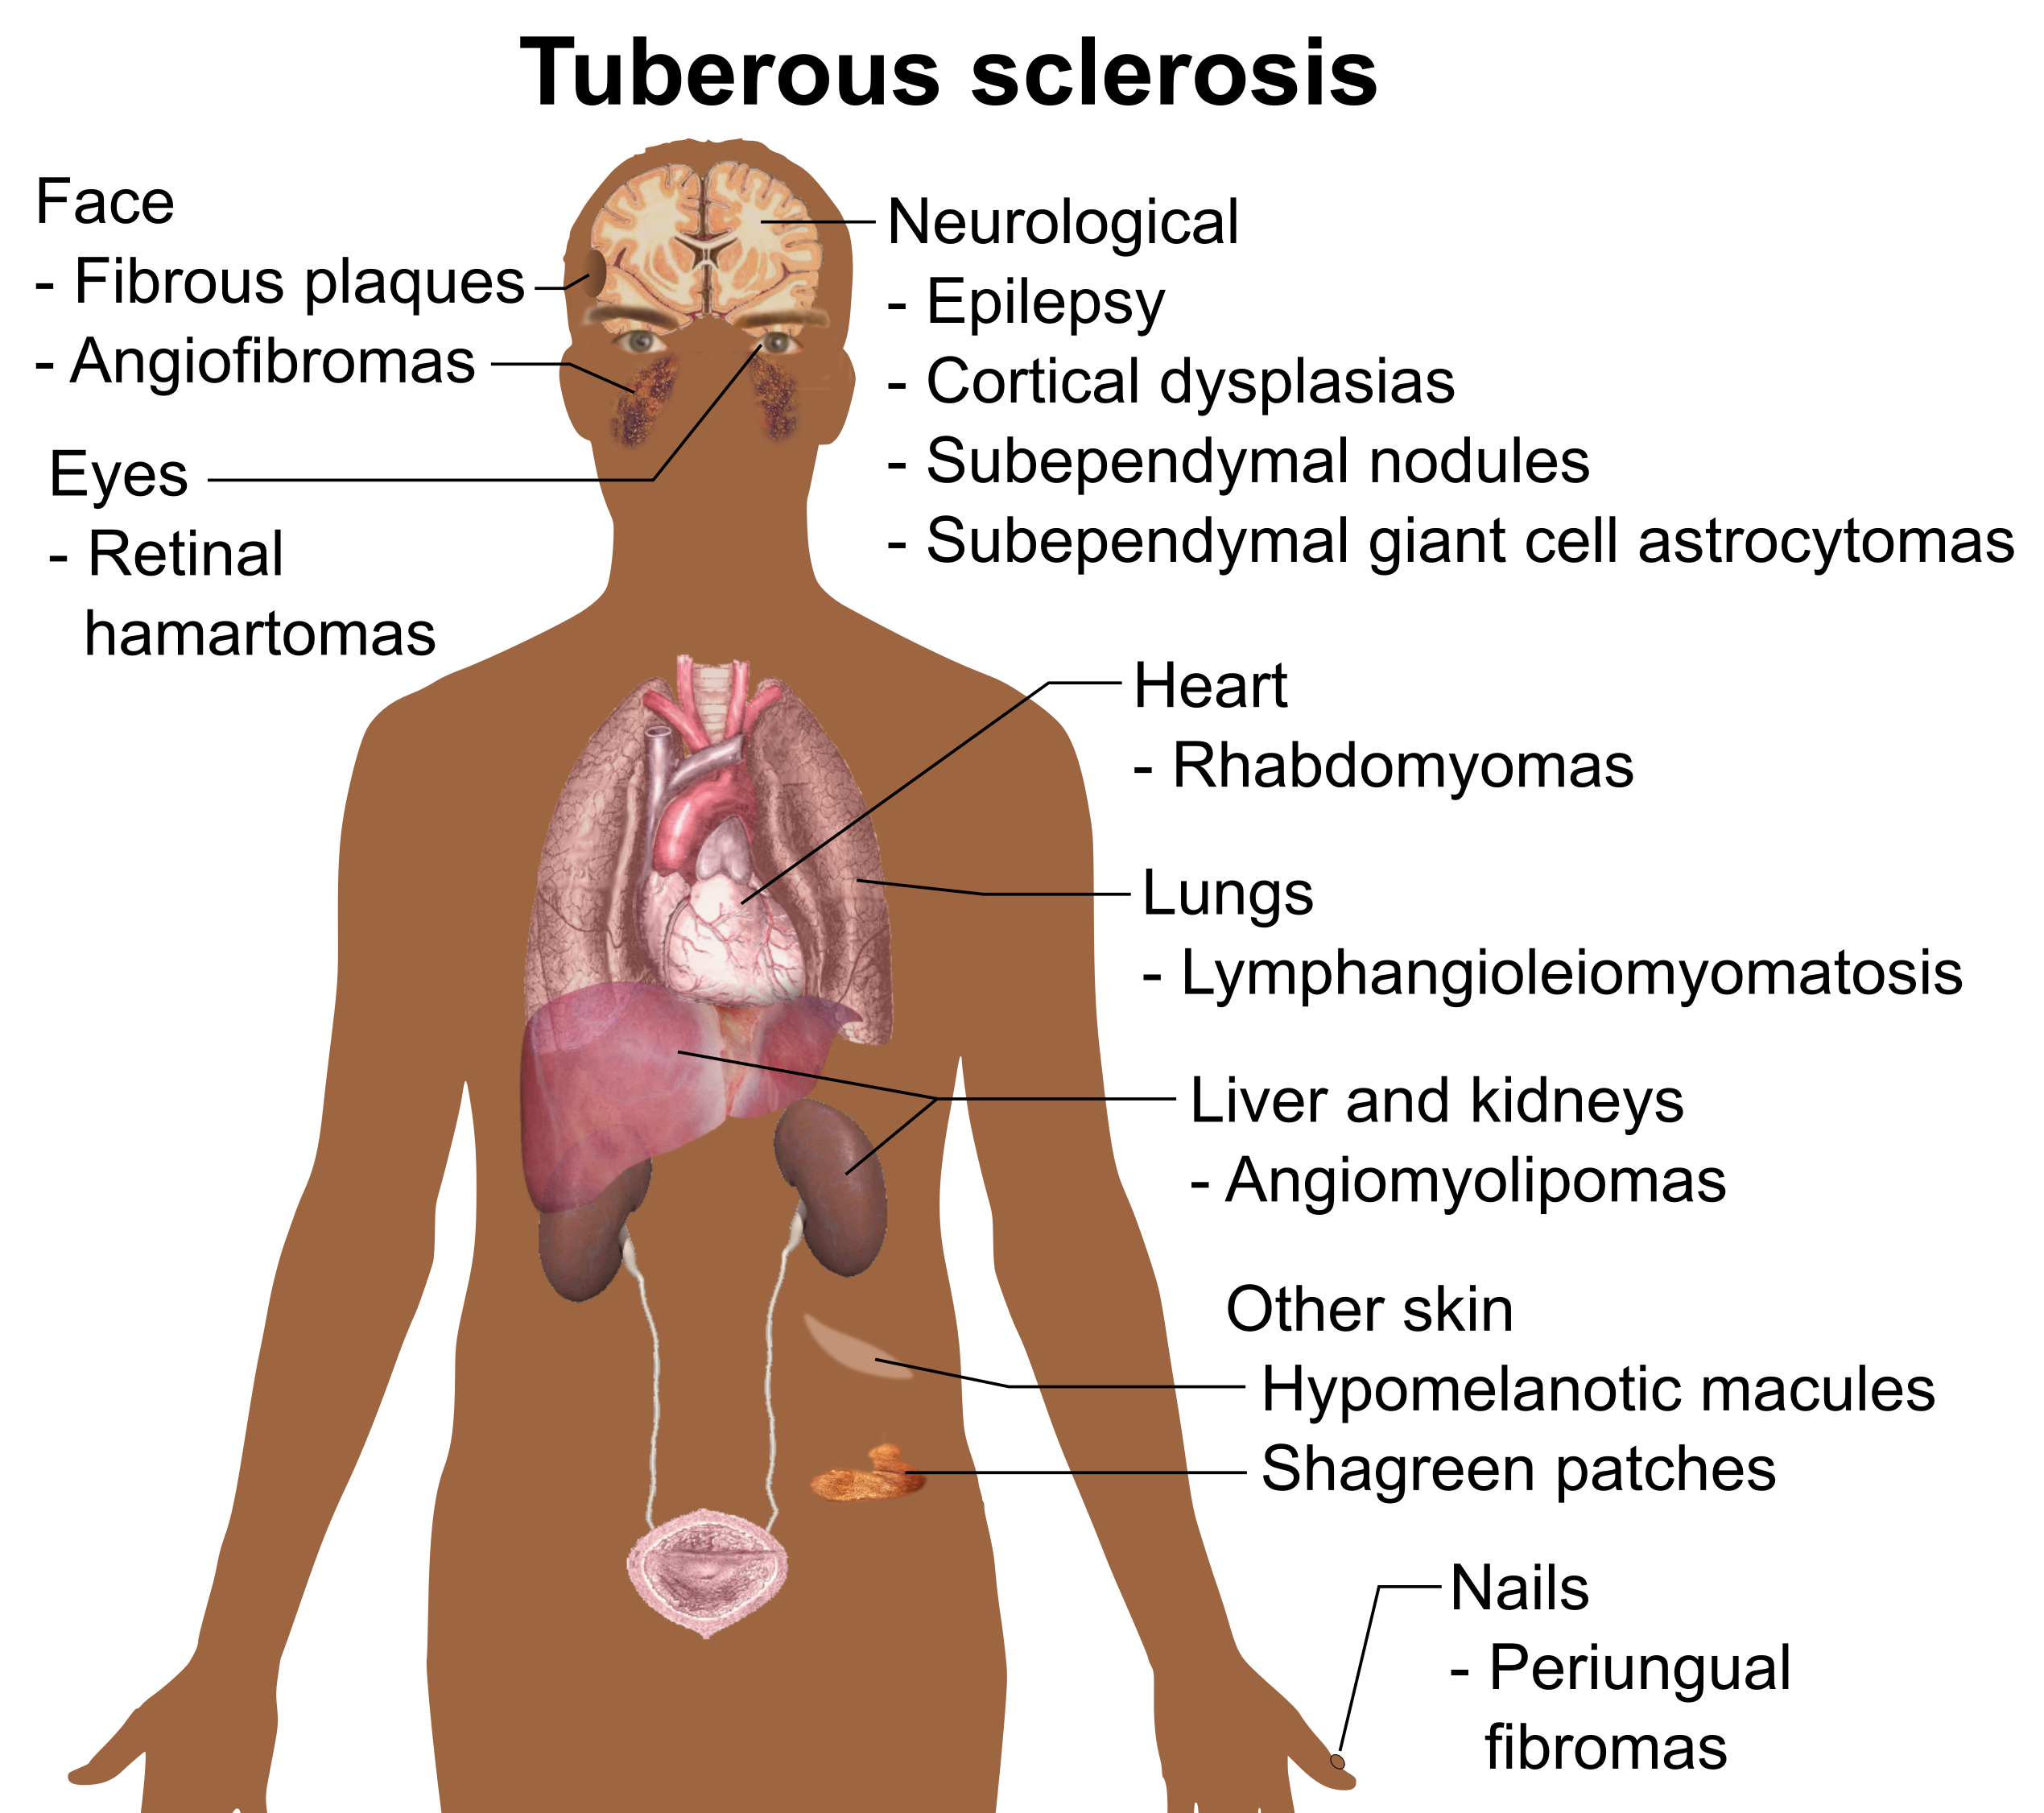 angiofibroma tuberous sclerosis